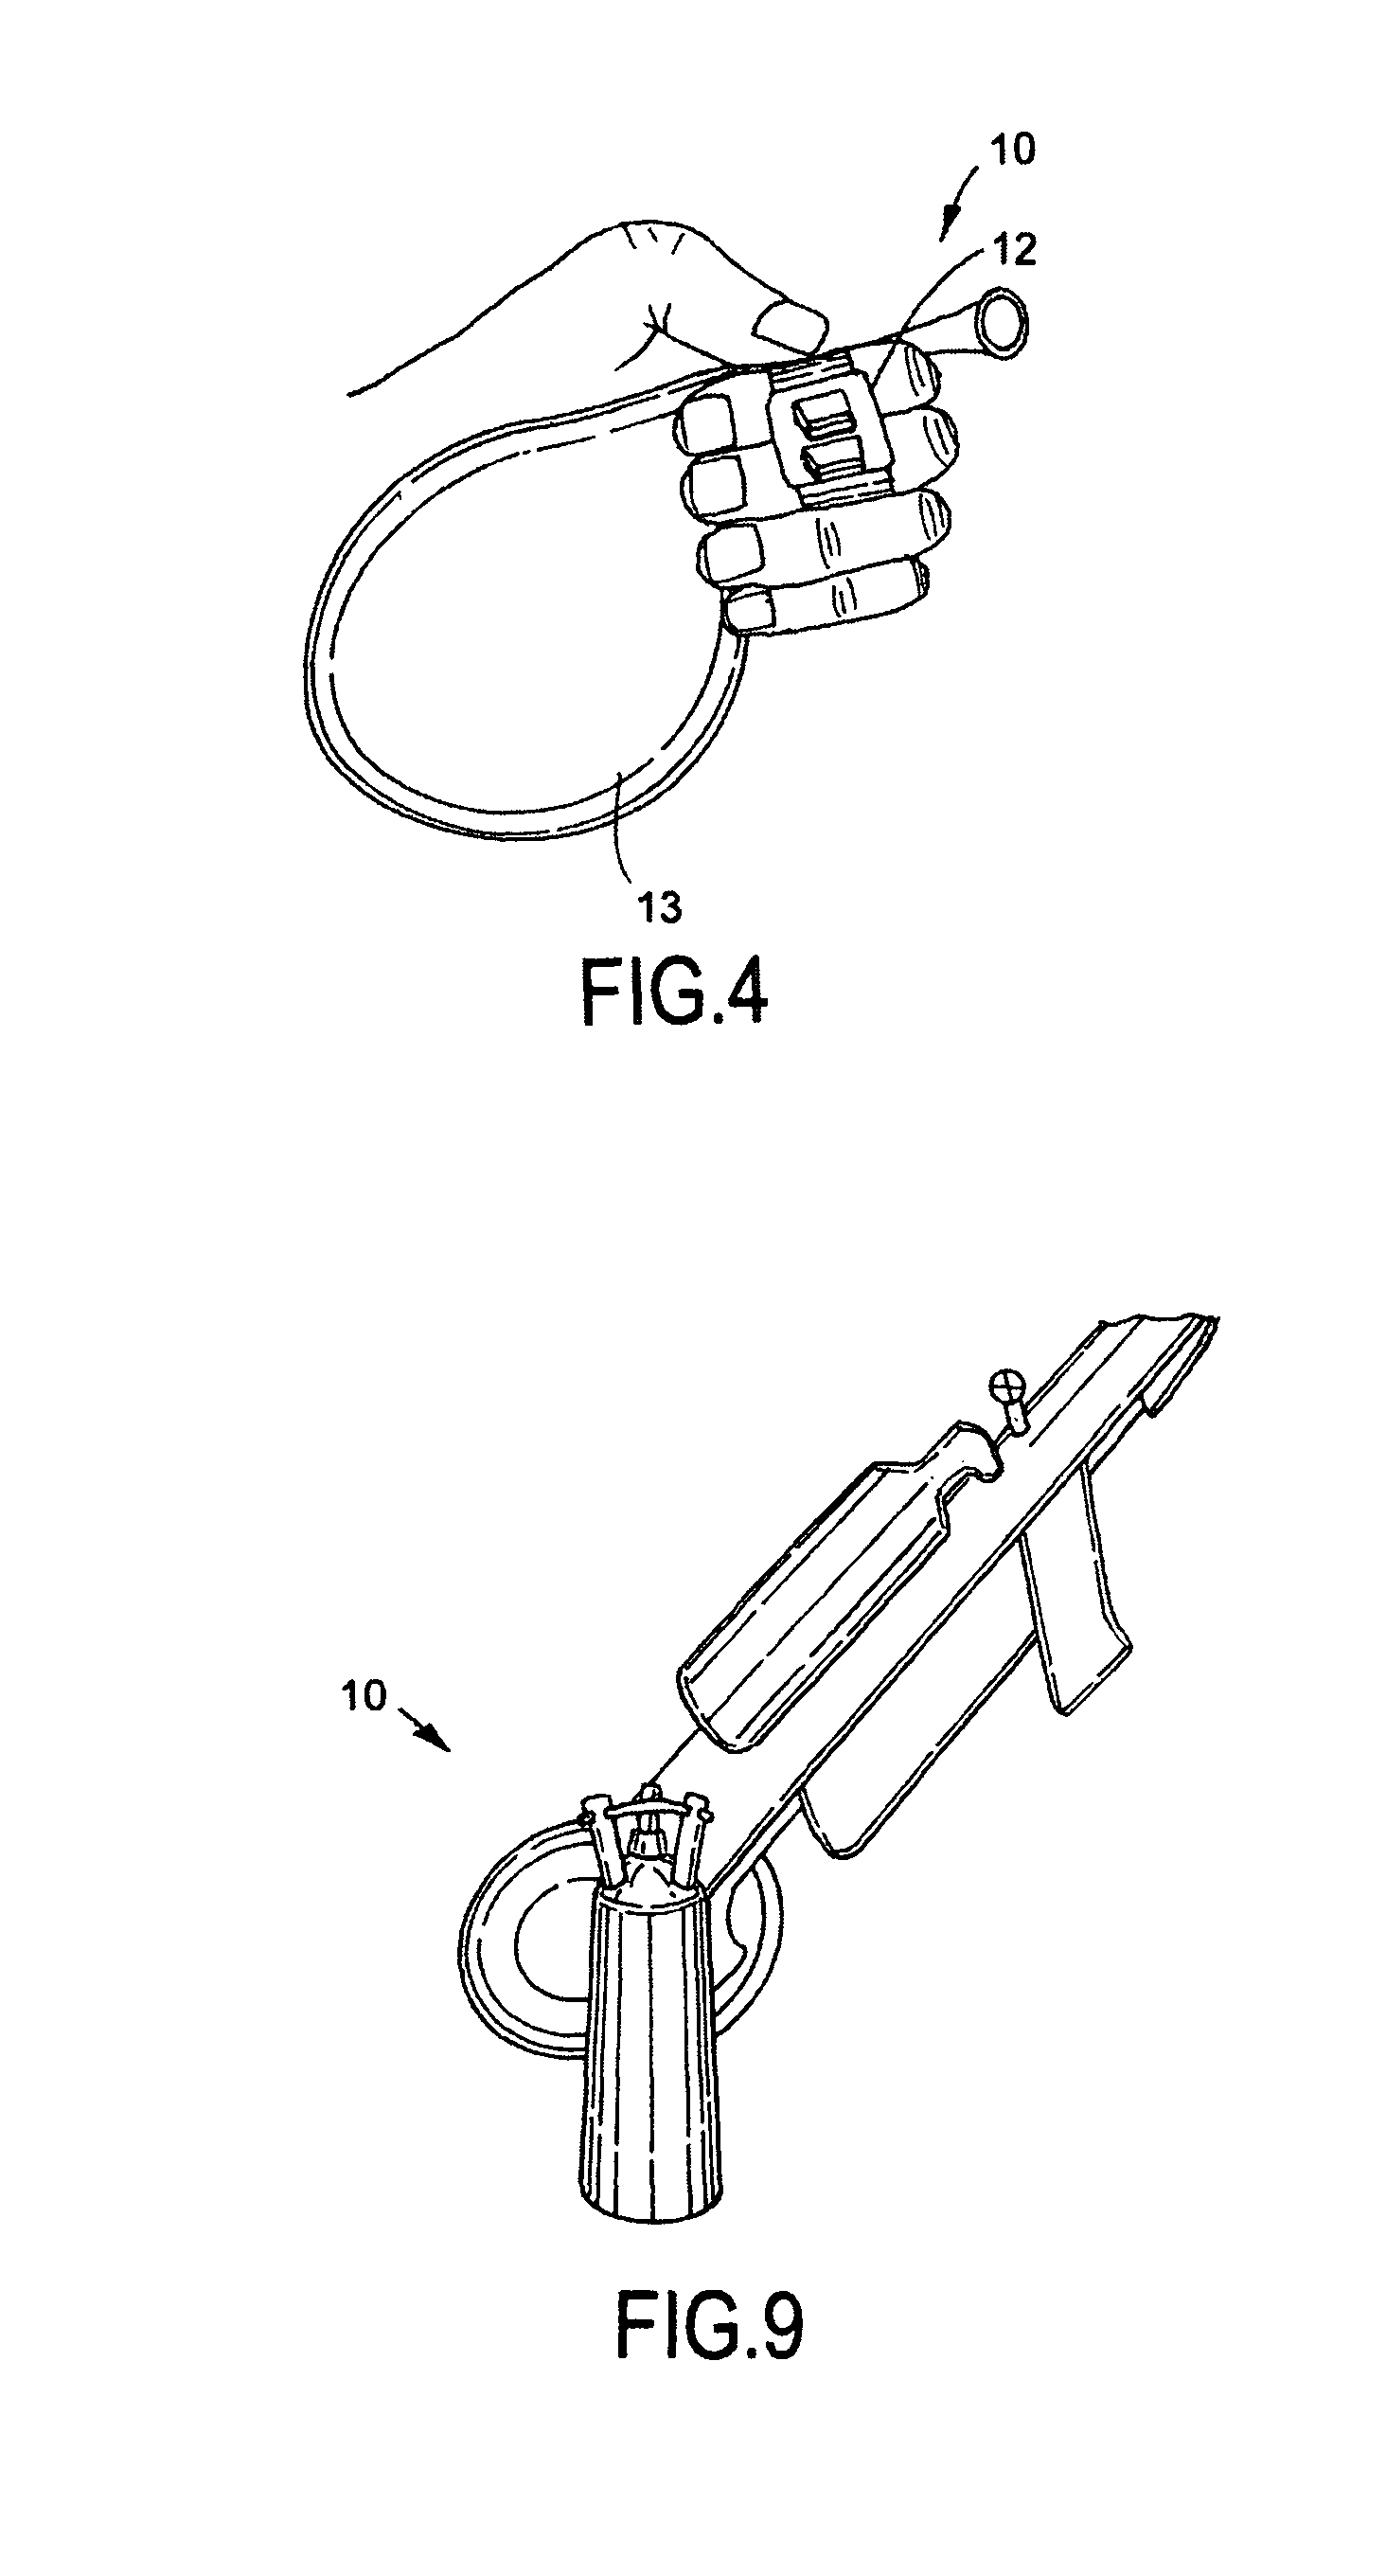 Balloon-tying device